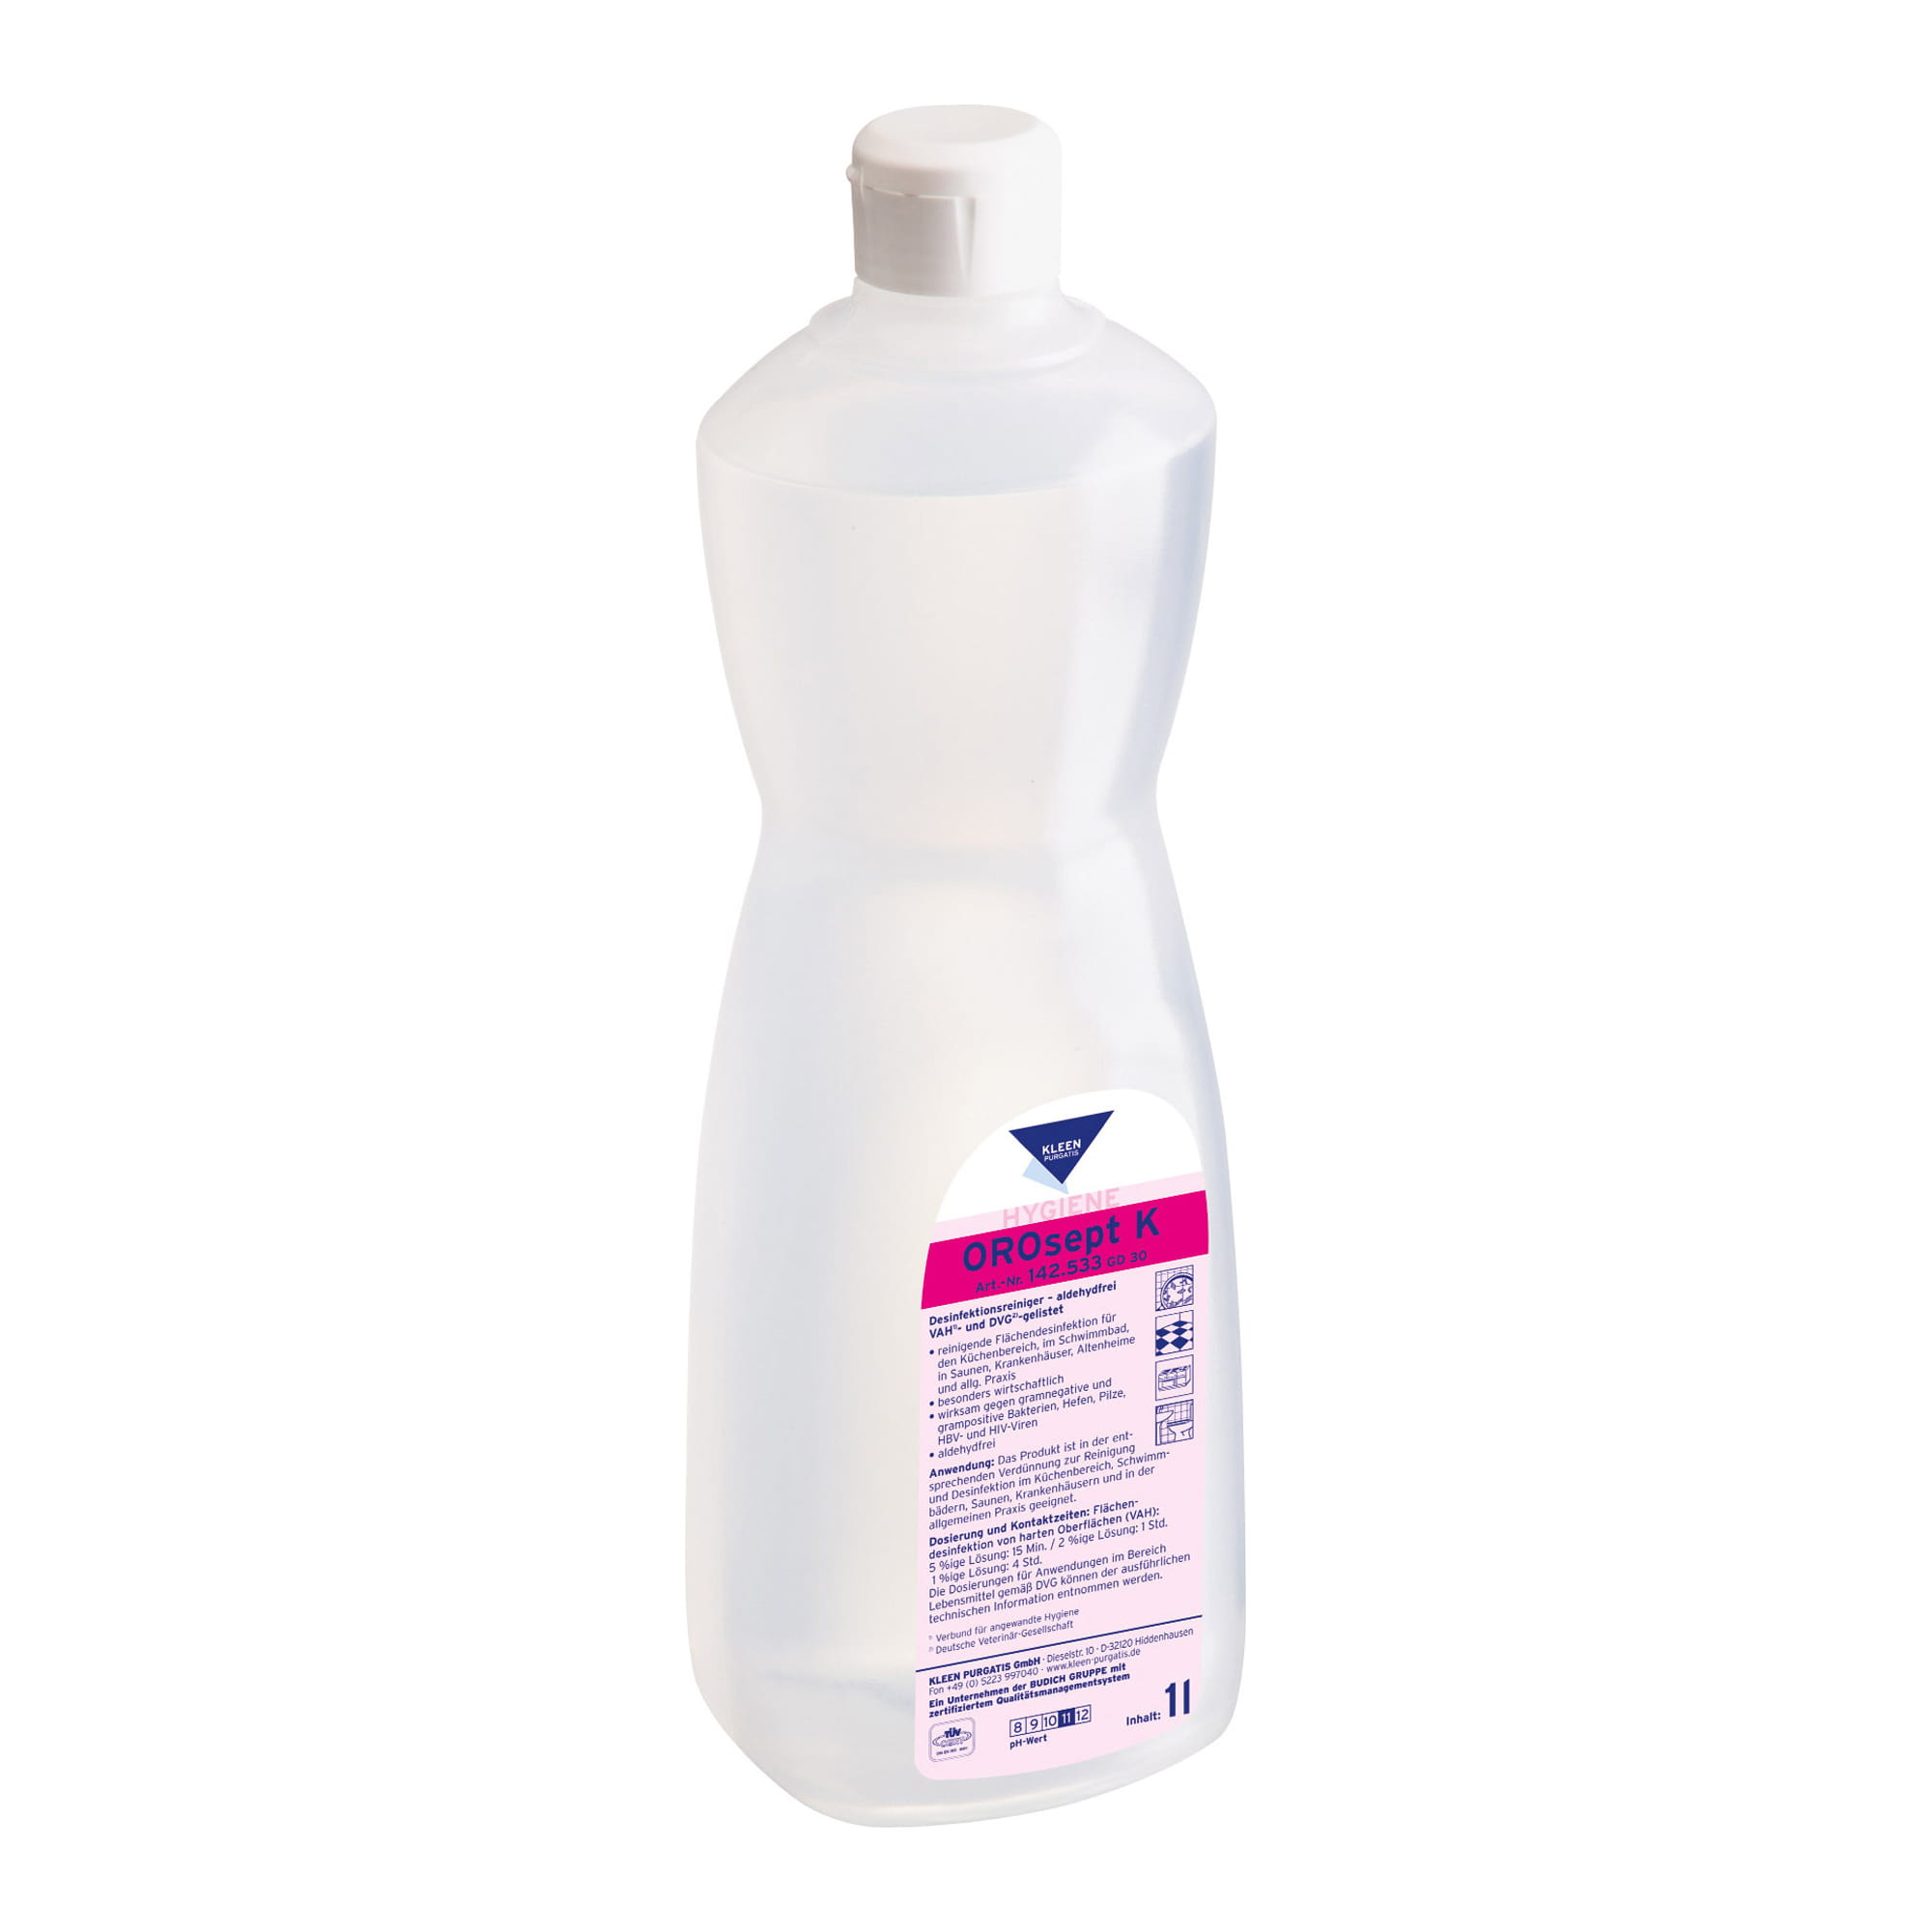 Kleen Purgatis Orosept K aldehydfreies Flächendesinfektionsmittel-Konzentrat 1 Liter Flasche 90142533_1